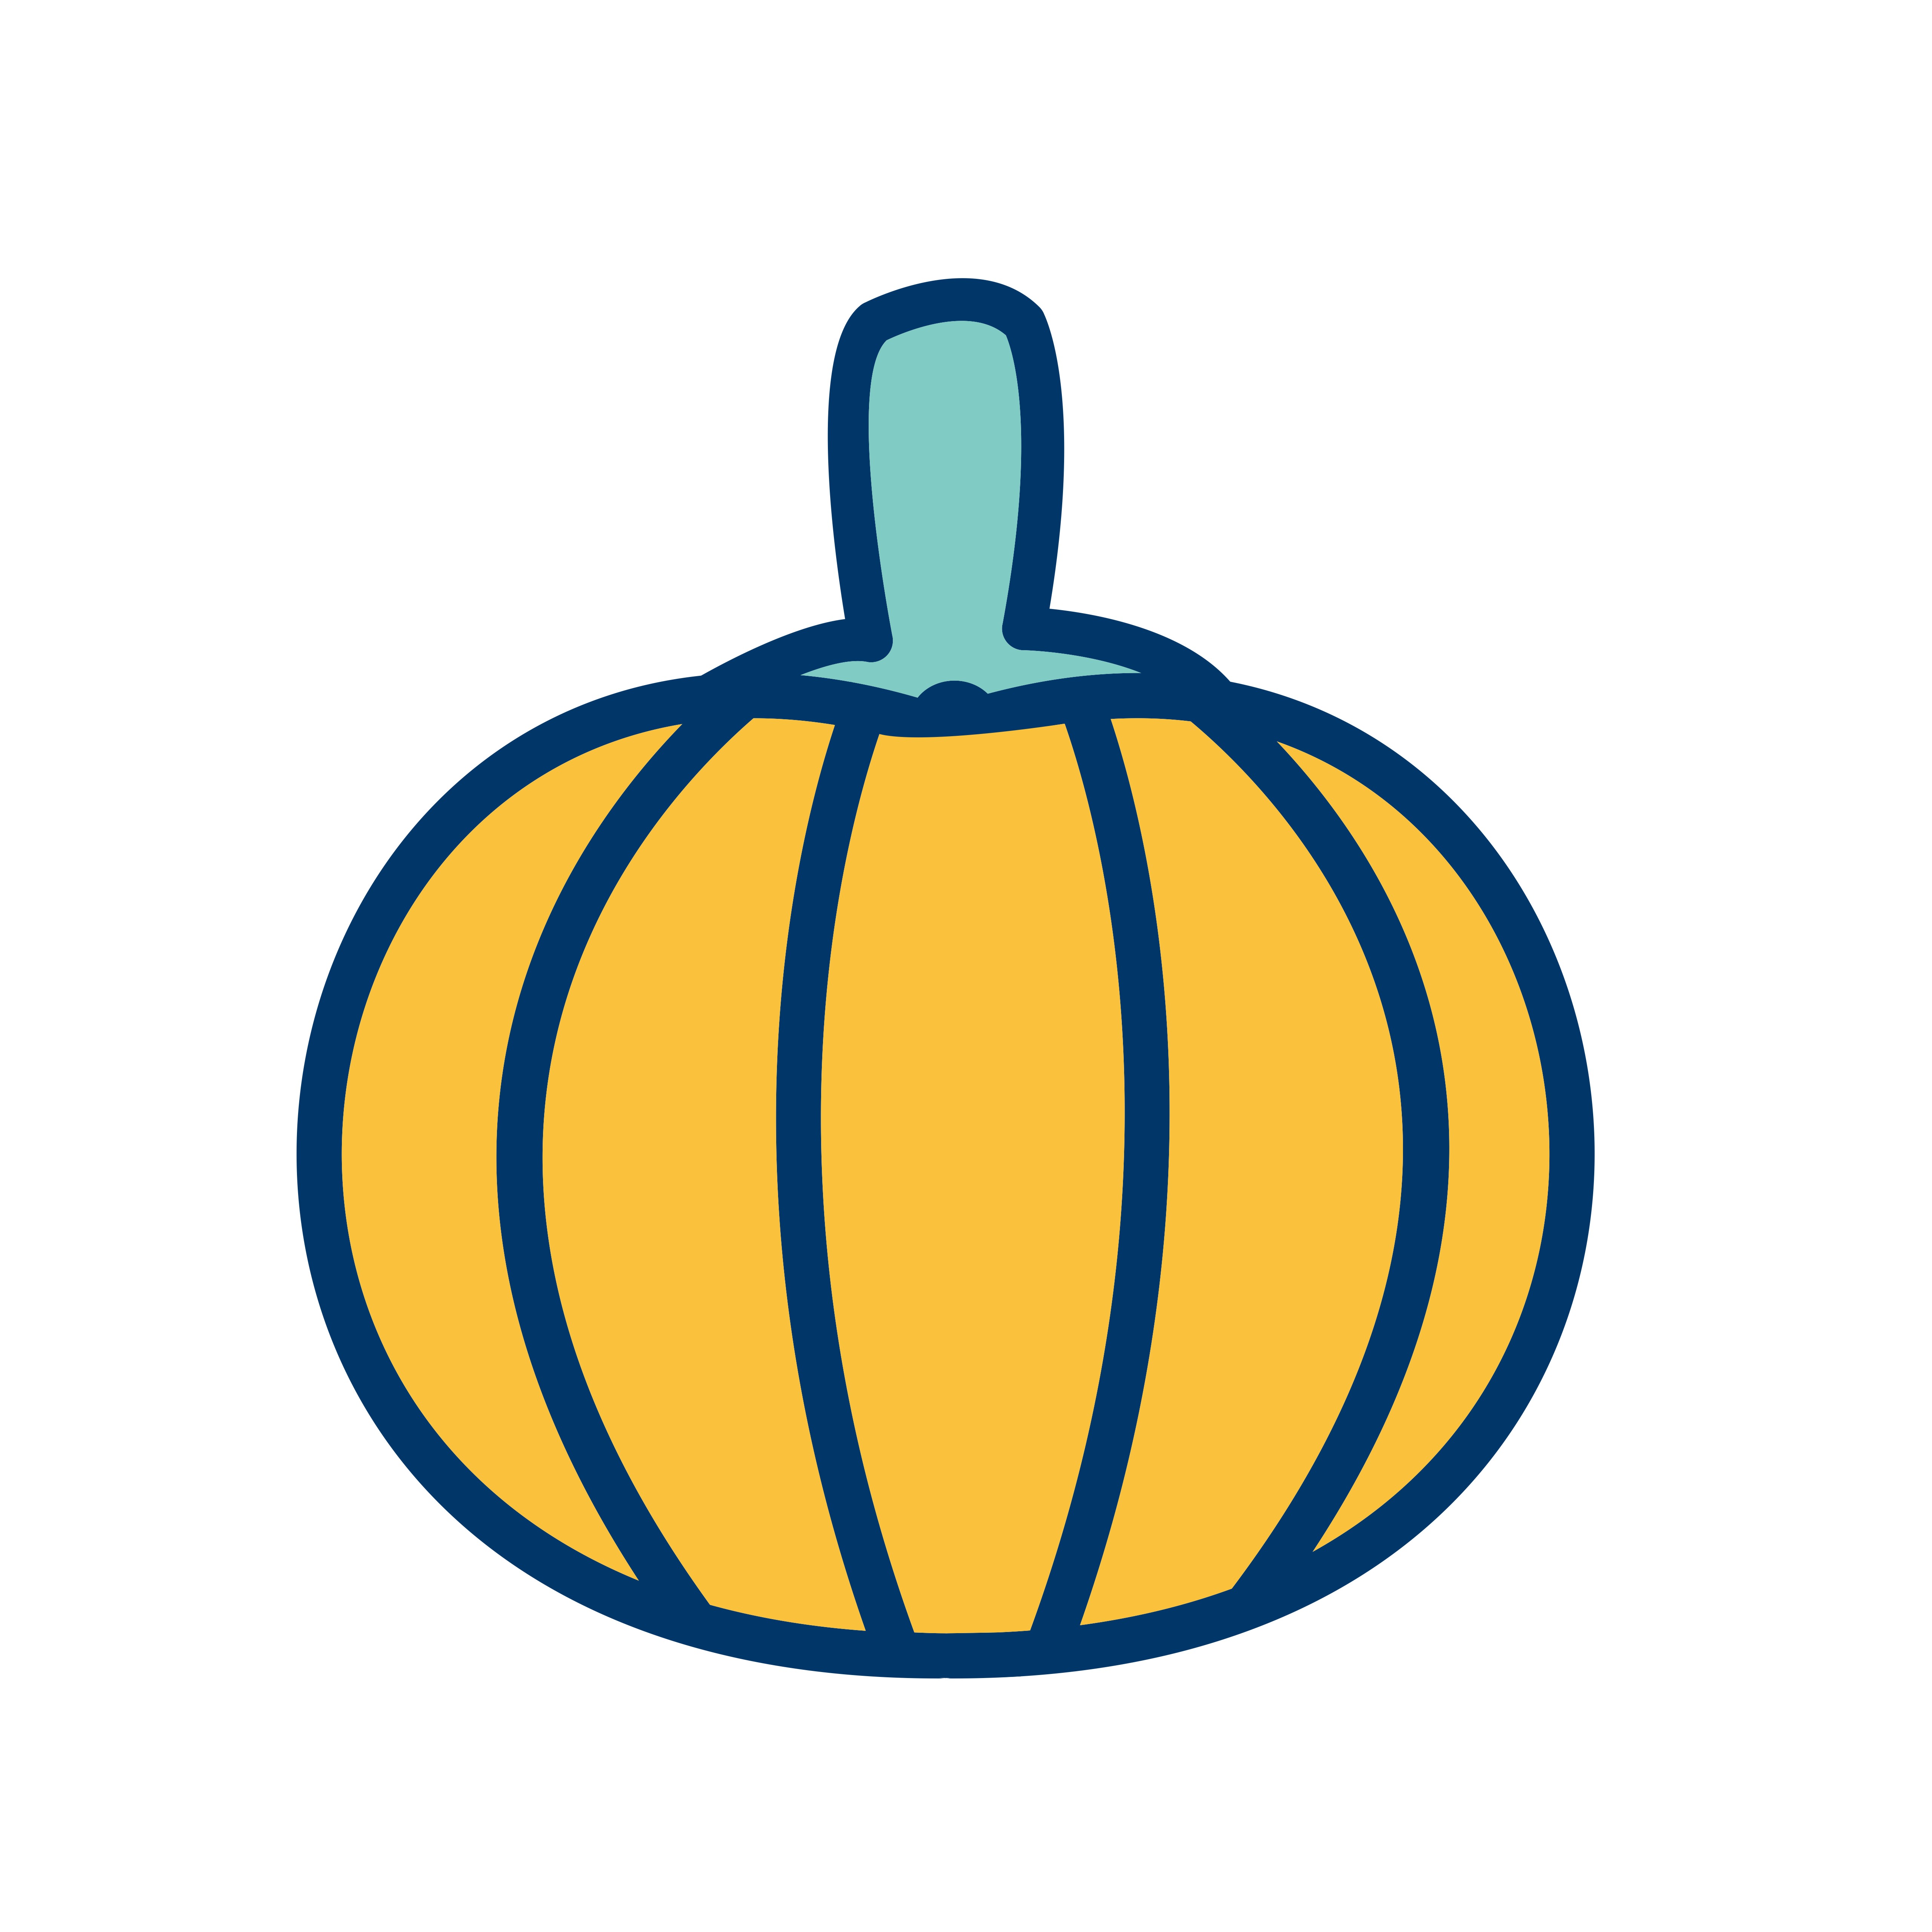 Download Vector Pumpkin Icon - Download Free Vectors, Clipart Graphics & Vector Art